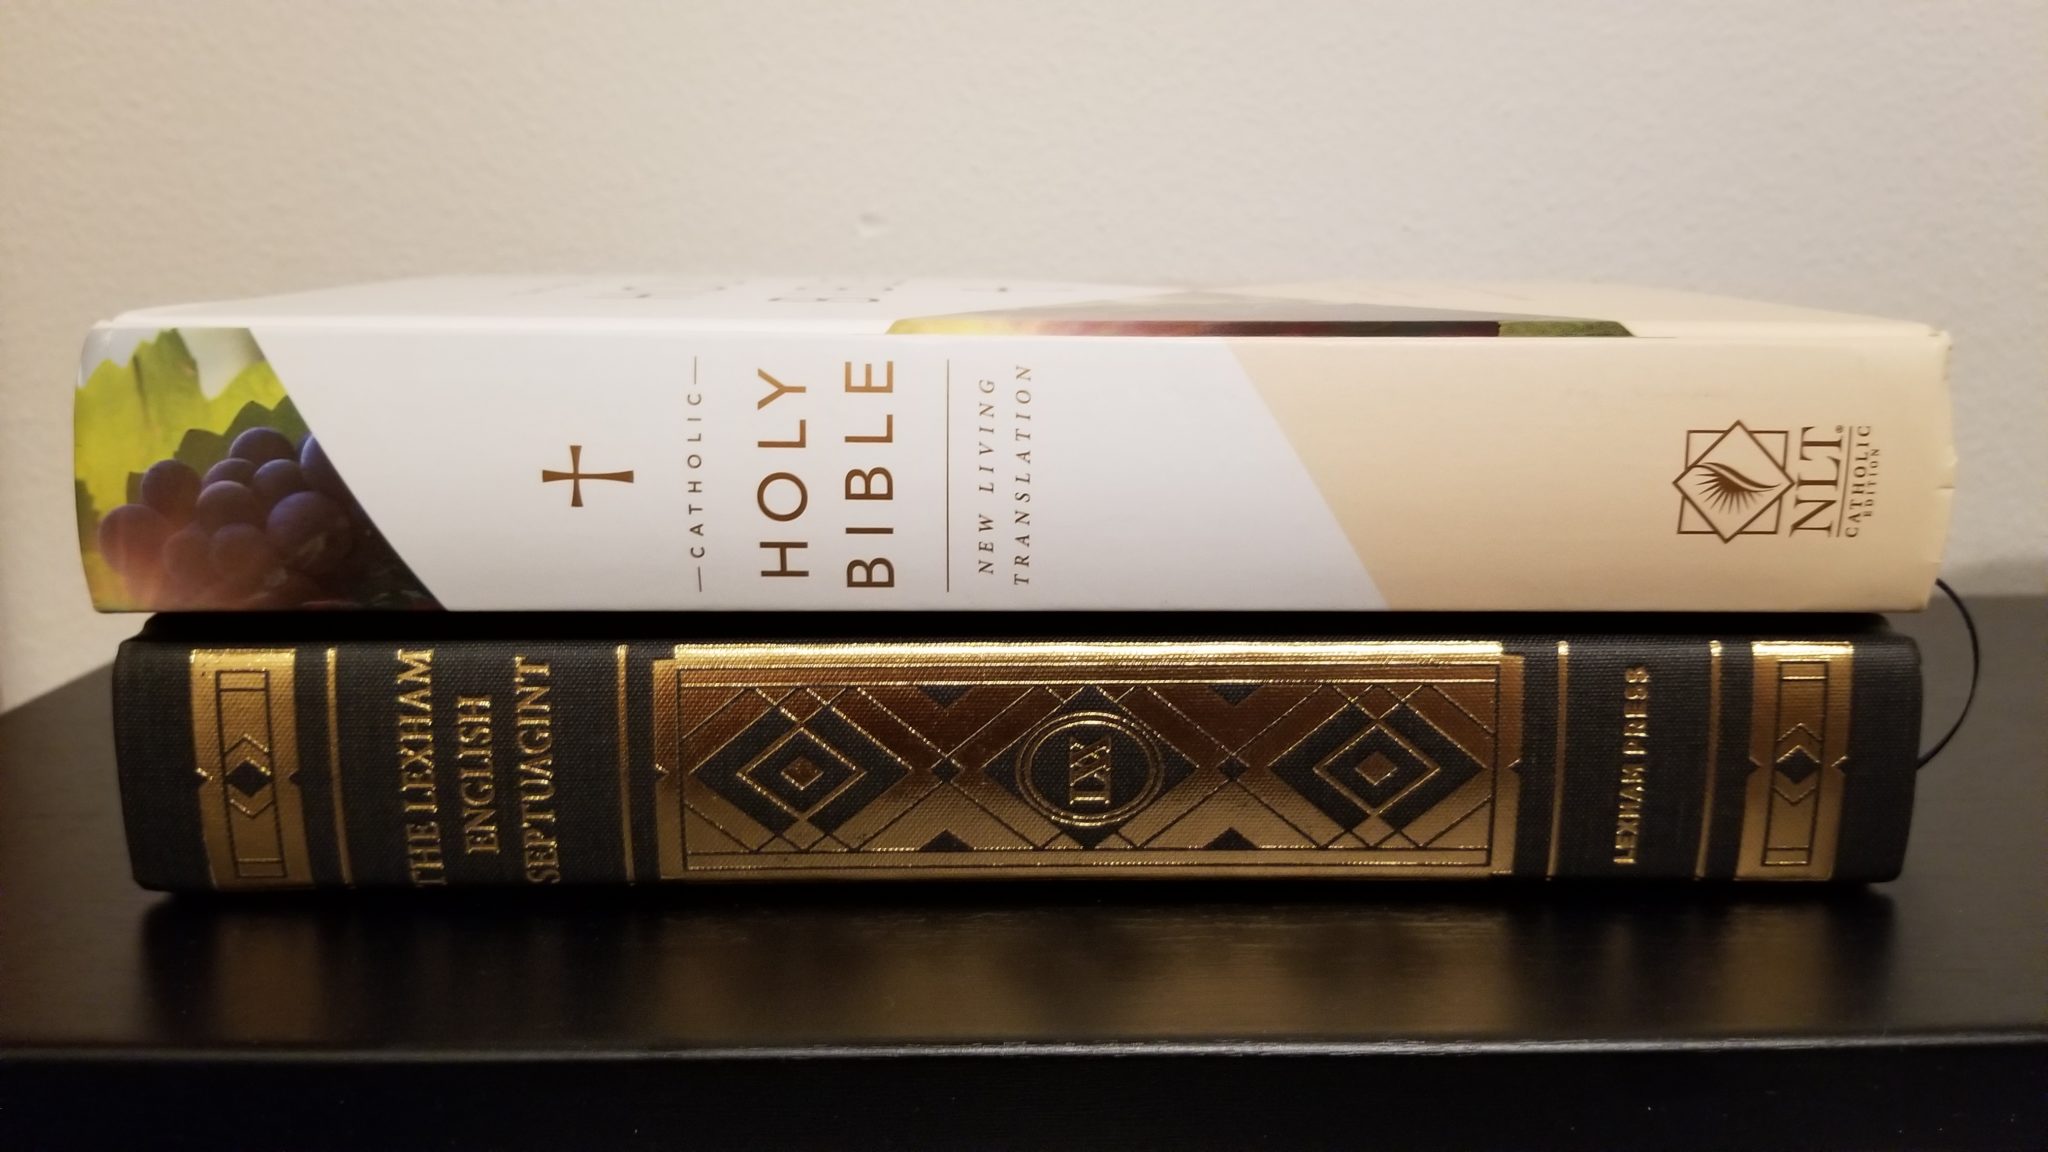 septuigent english bible